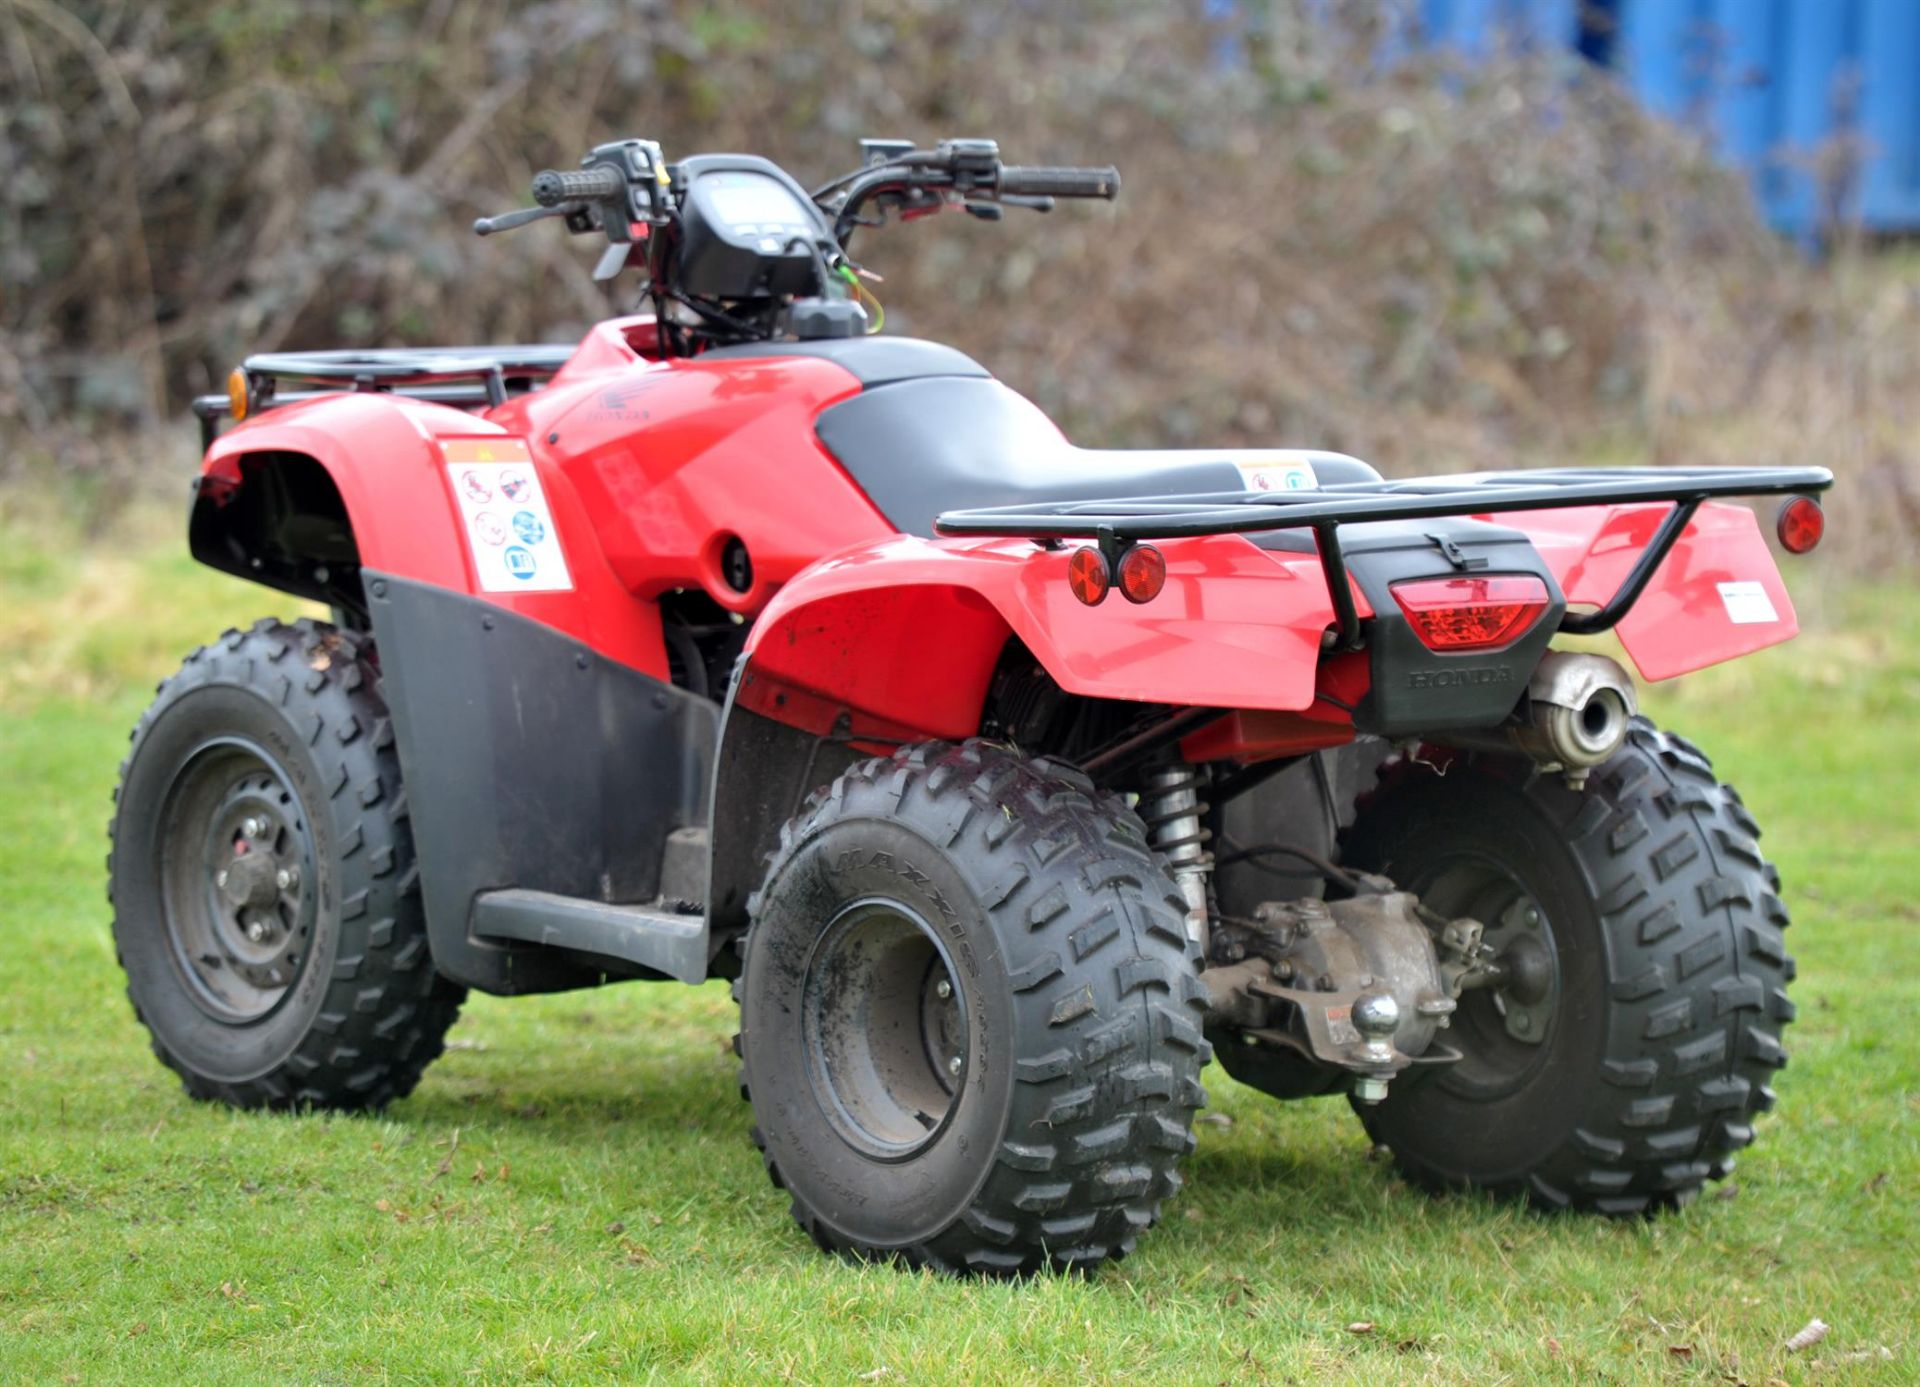 Honda Quad Bike ATV - TRX 250 TEM. Red. 250cc. - All wheel drive Honda Quad bike - One owner quad - Image 13 of 19